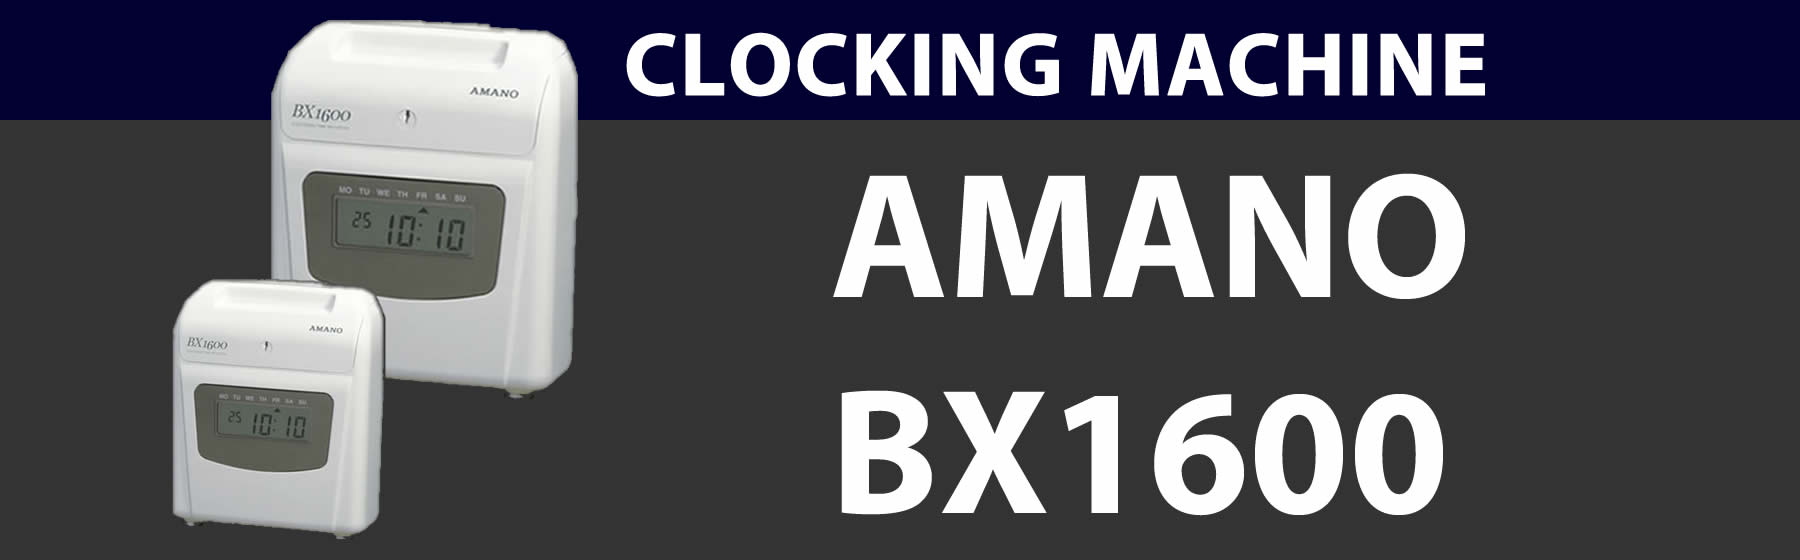 clocking-machine-AMANO BX 1600 Banner